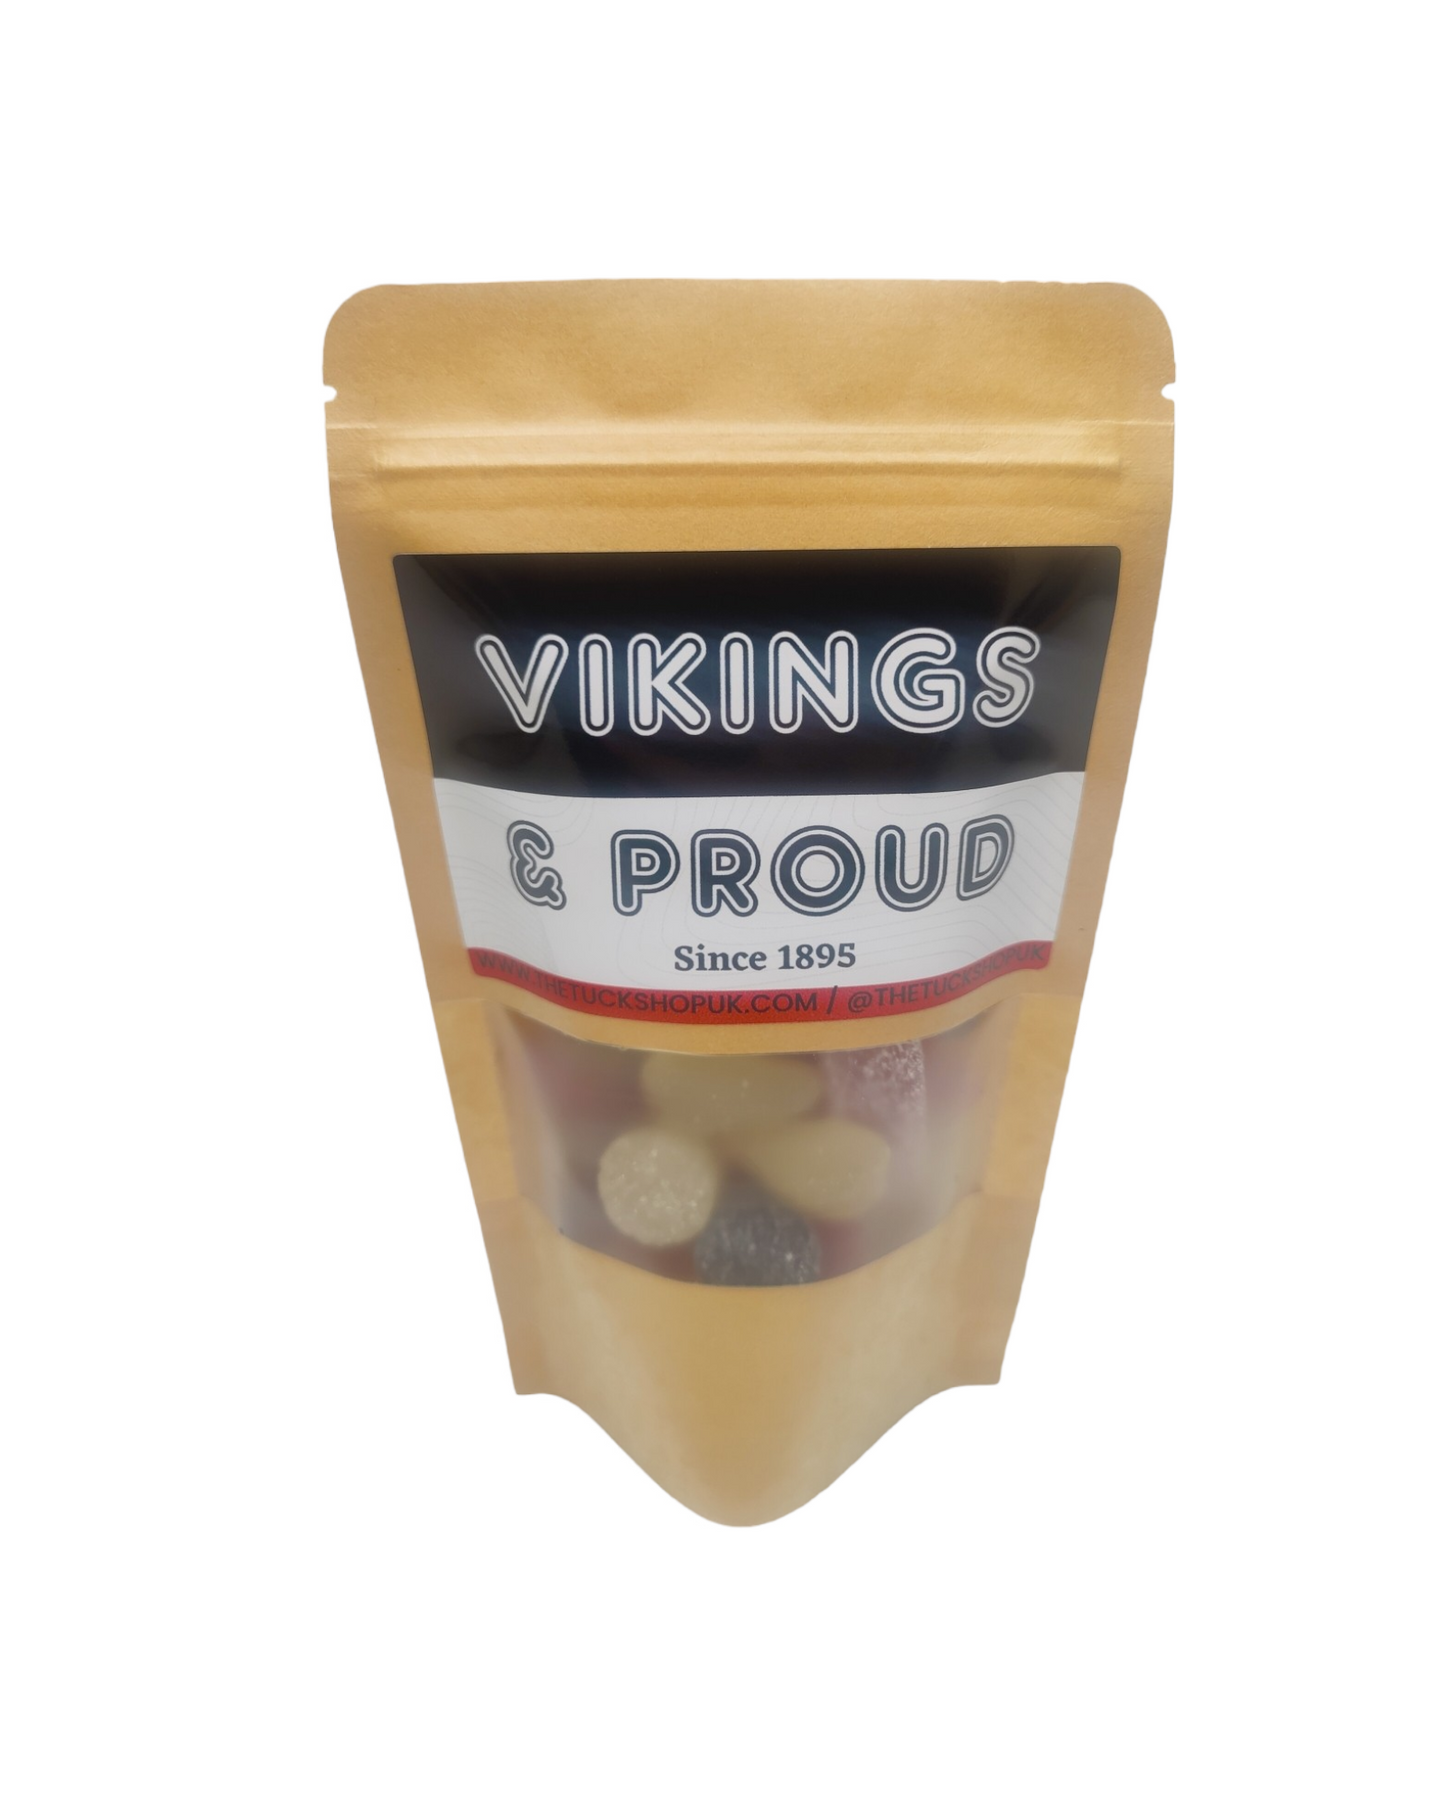 Vikings & Proud Rugby Gift 200g